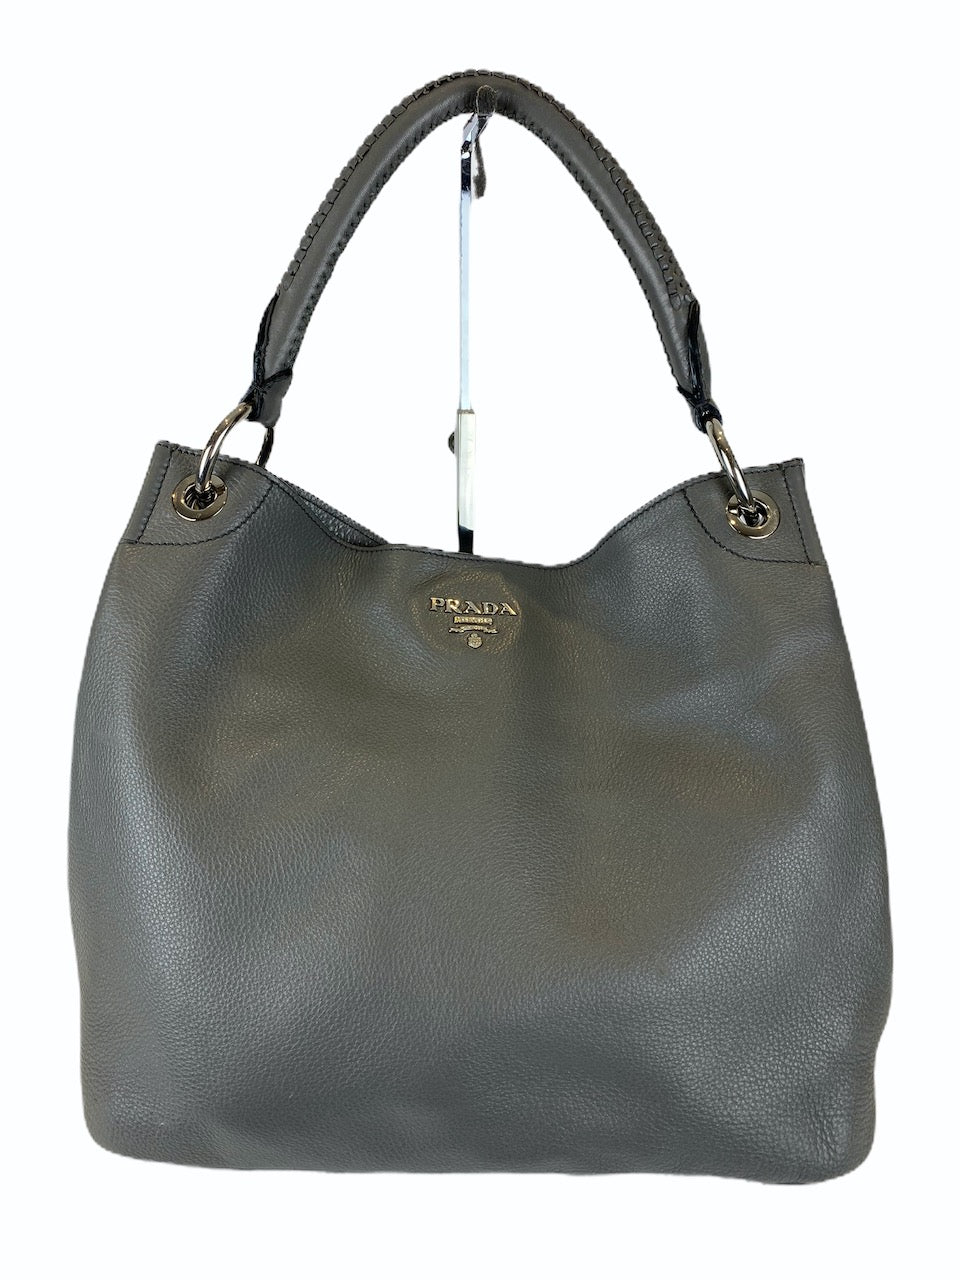 Prada Grey Leather Hobo - As Seen on Instagram 2/9/20 - Siopaella Designer Exchange